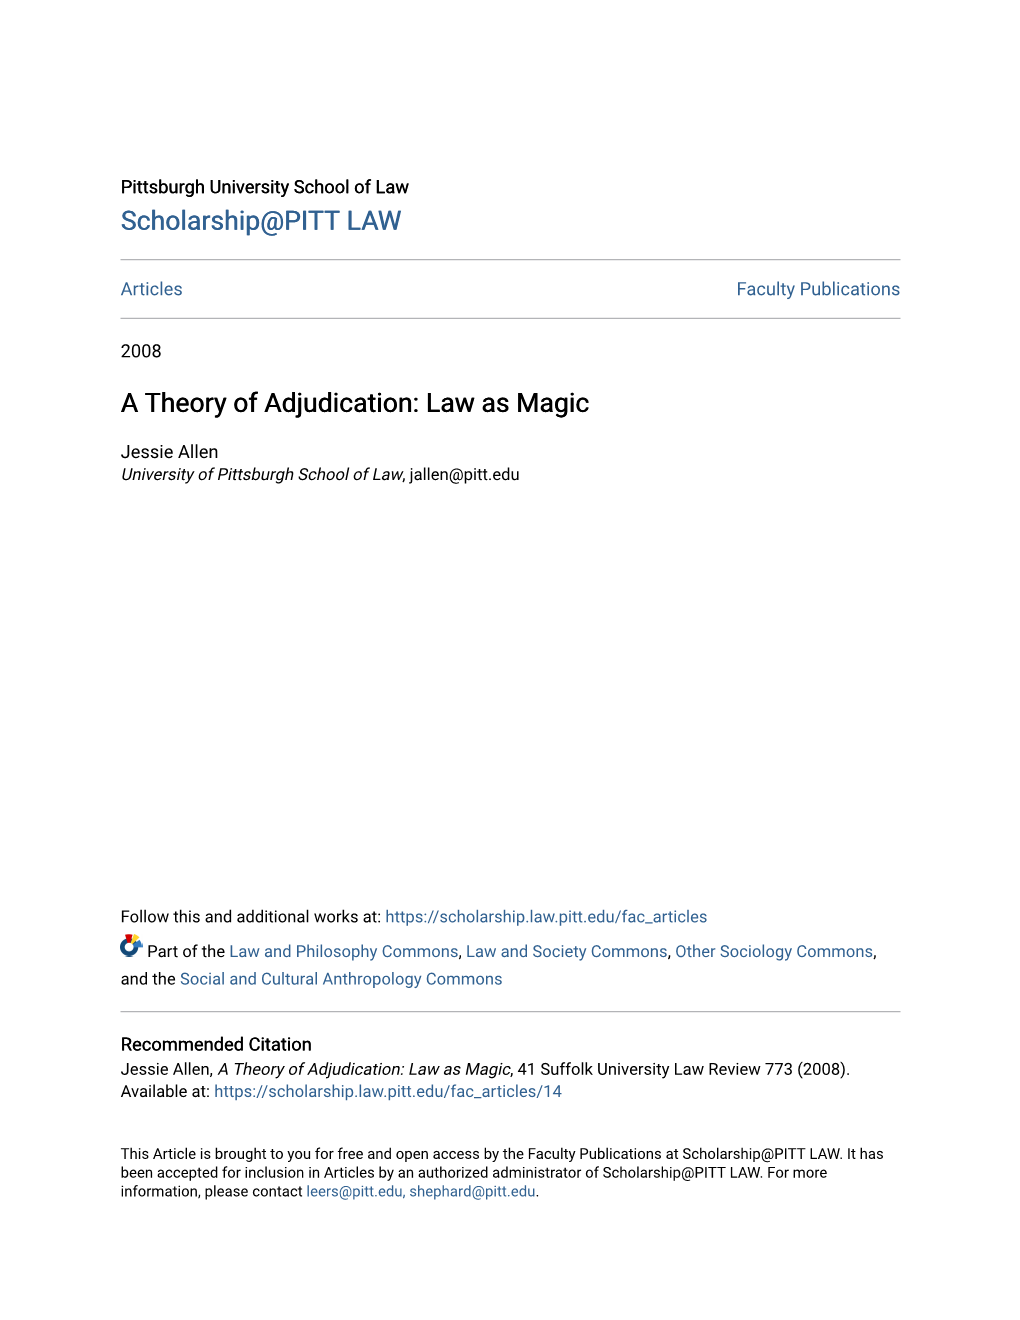 A Theory of Adjudication: Law As Magic